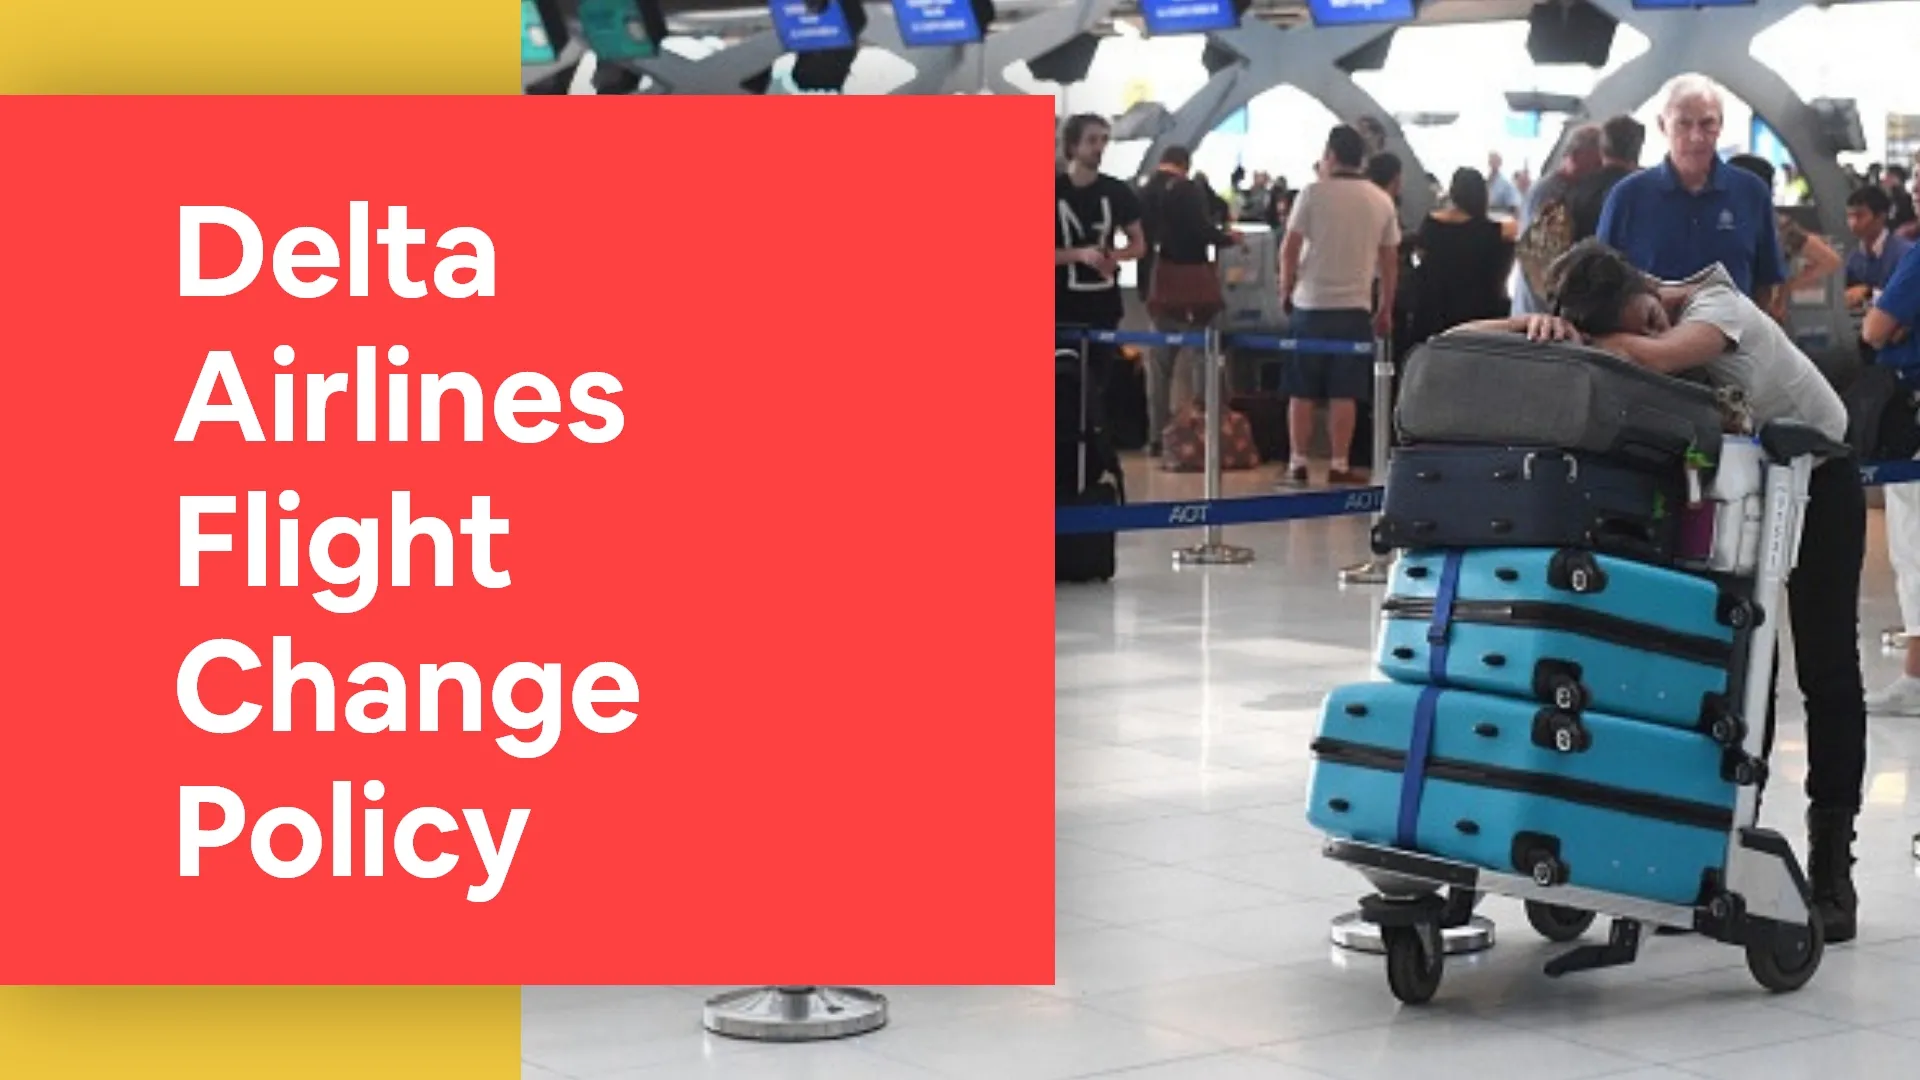 Delta Airlines Flight Change Policy online